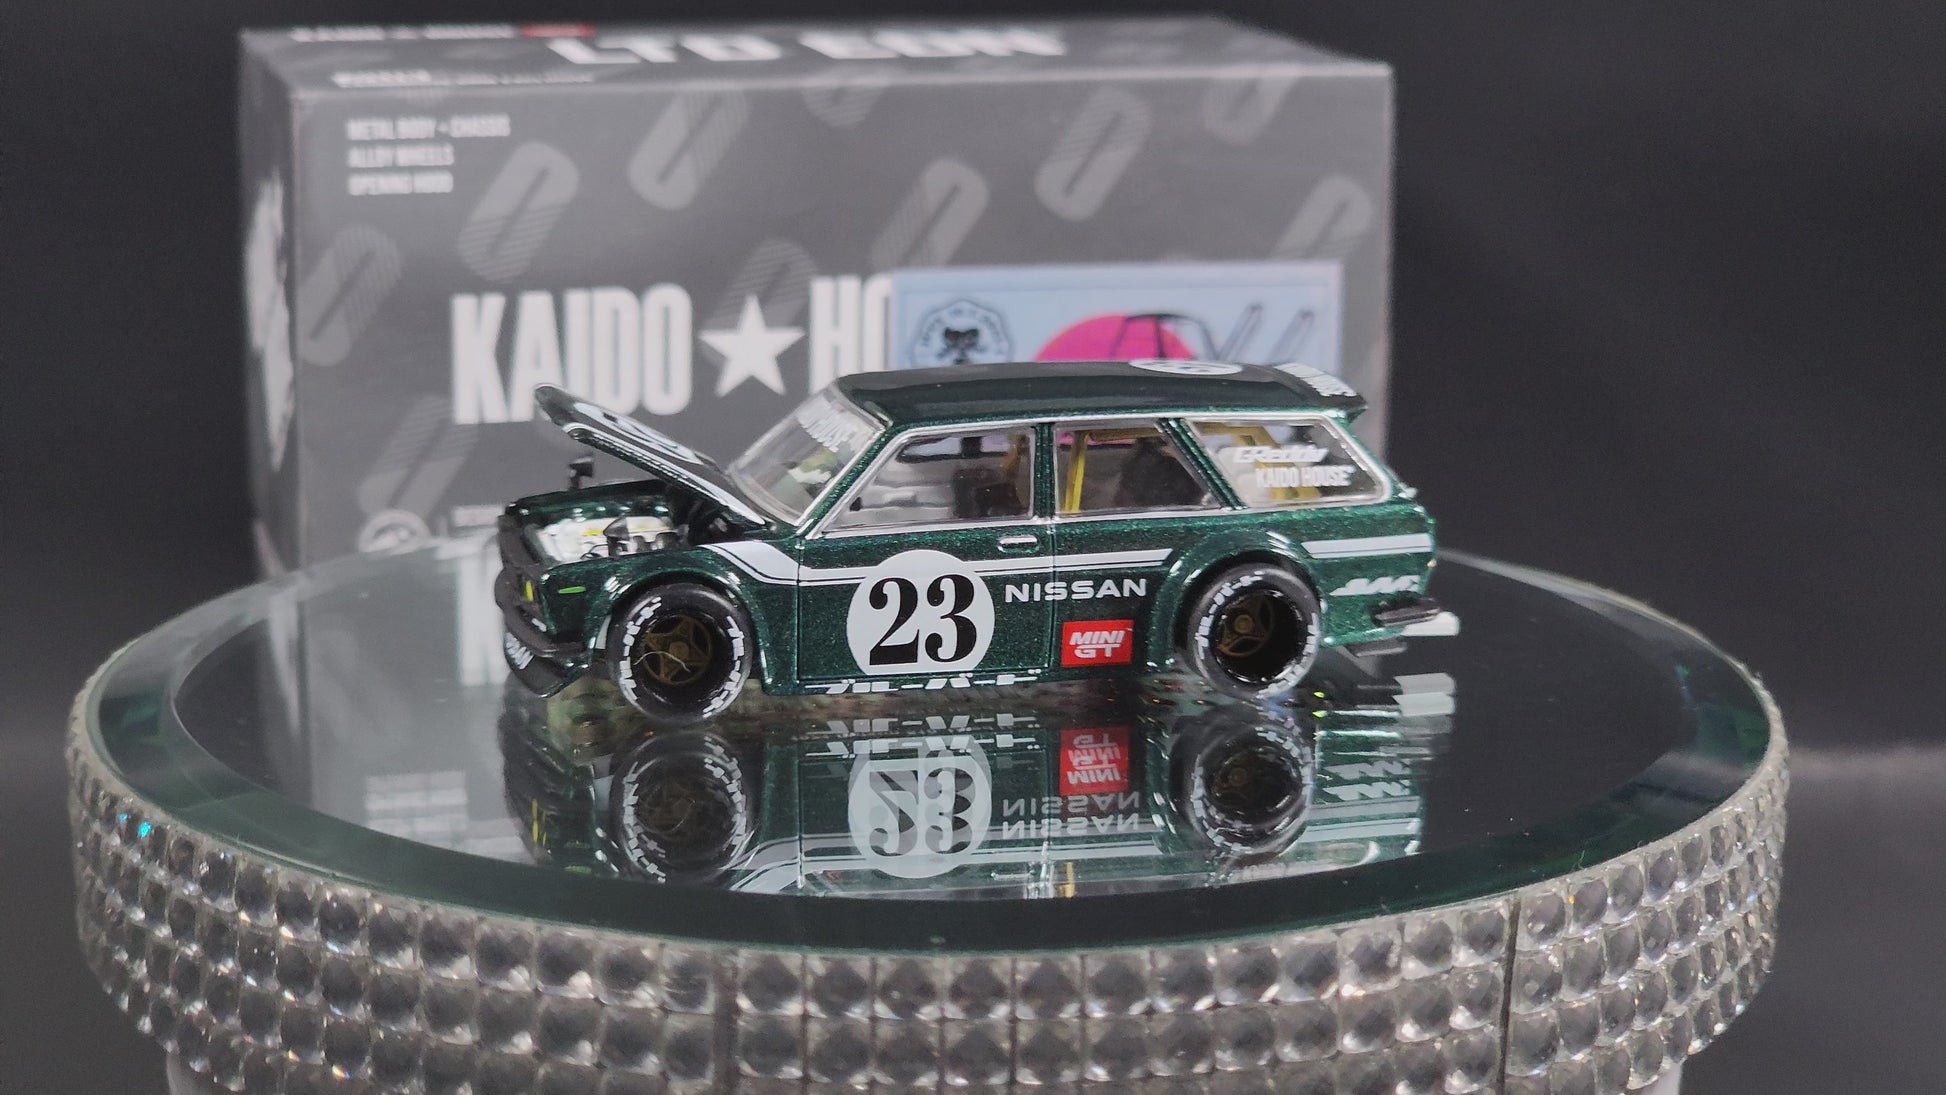 Kaido House Datsun 510 Wagon 4x4 Winter Holiday Edition – Sky High Garage